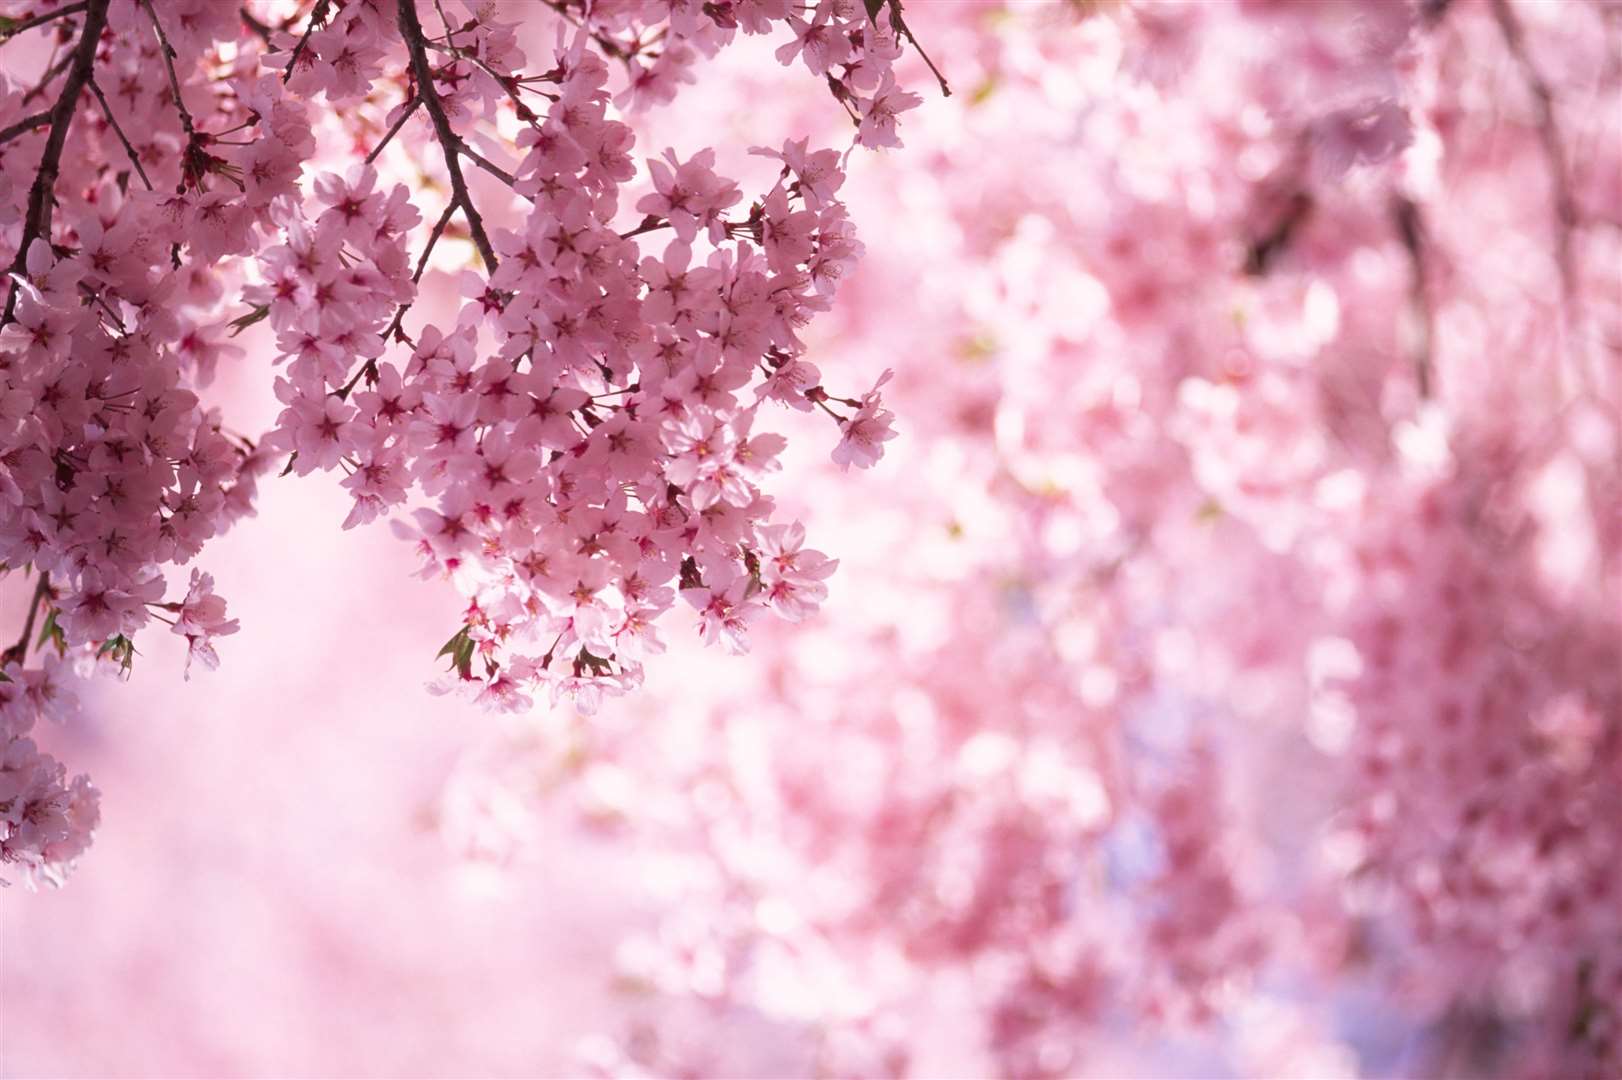 Cherry trees in full blossom. Image: iStock.